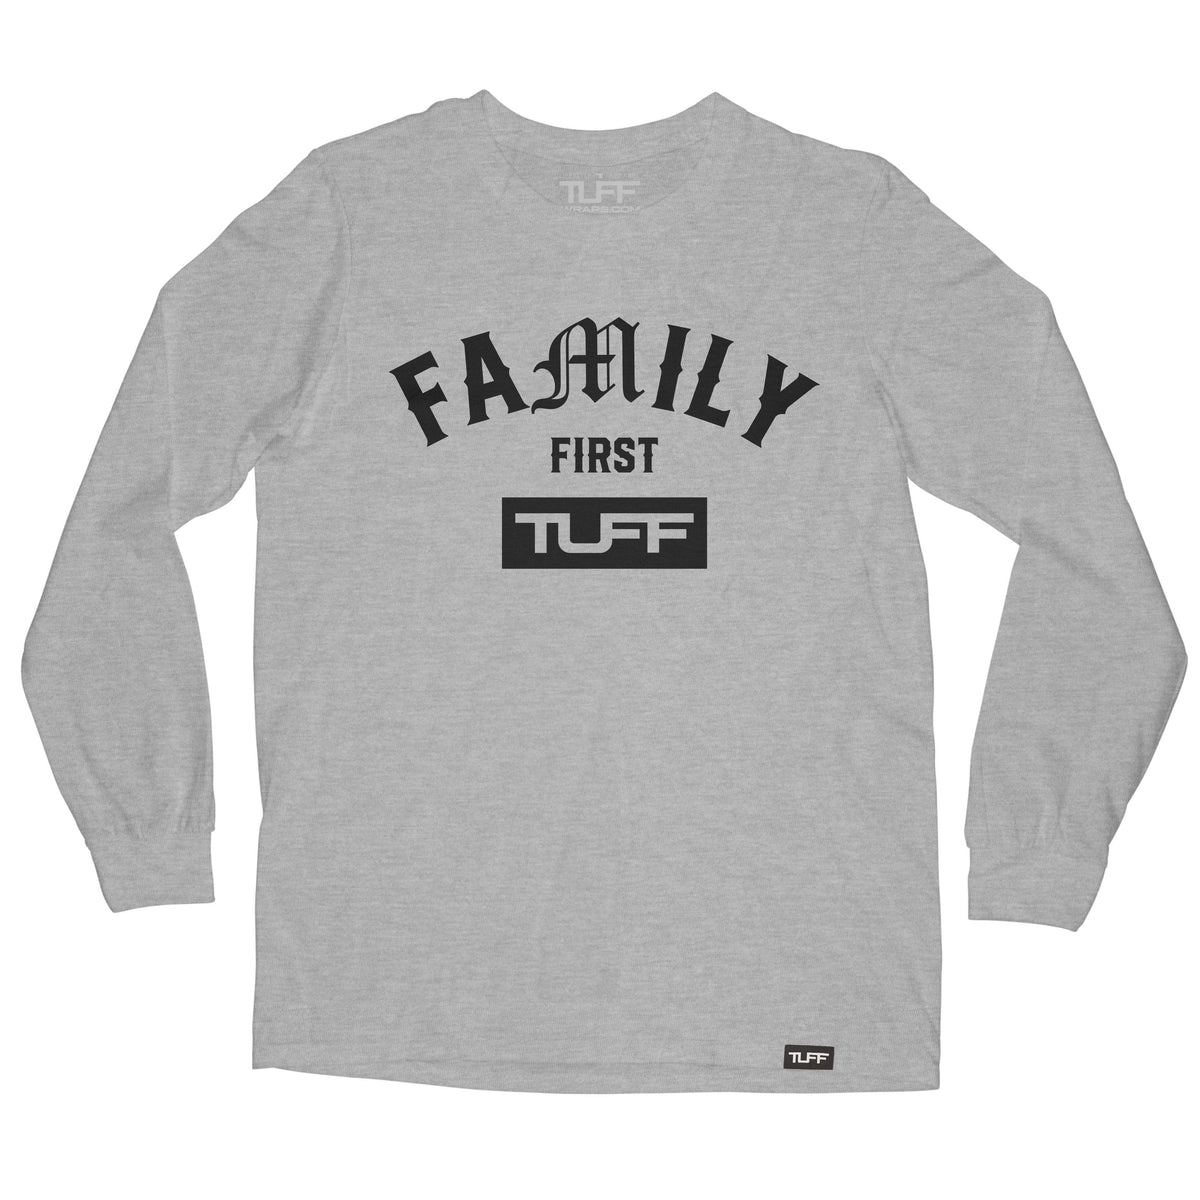 Family First Long Sleeve Tee S / Heather Gray TuffWraps.com